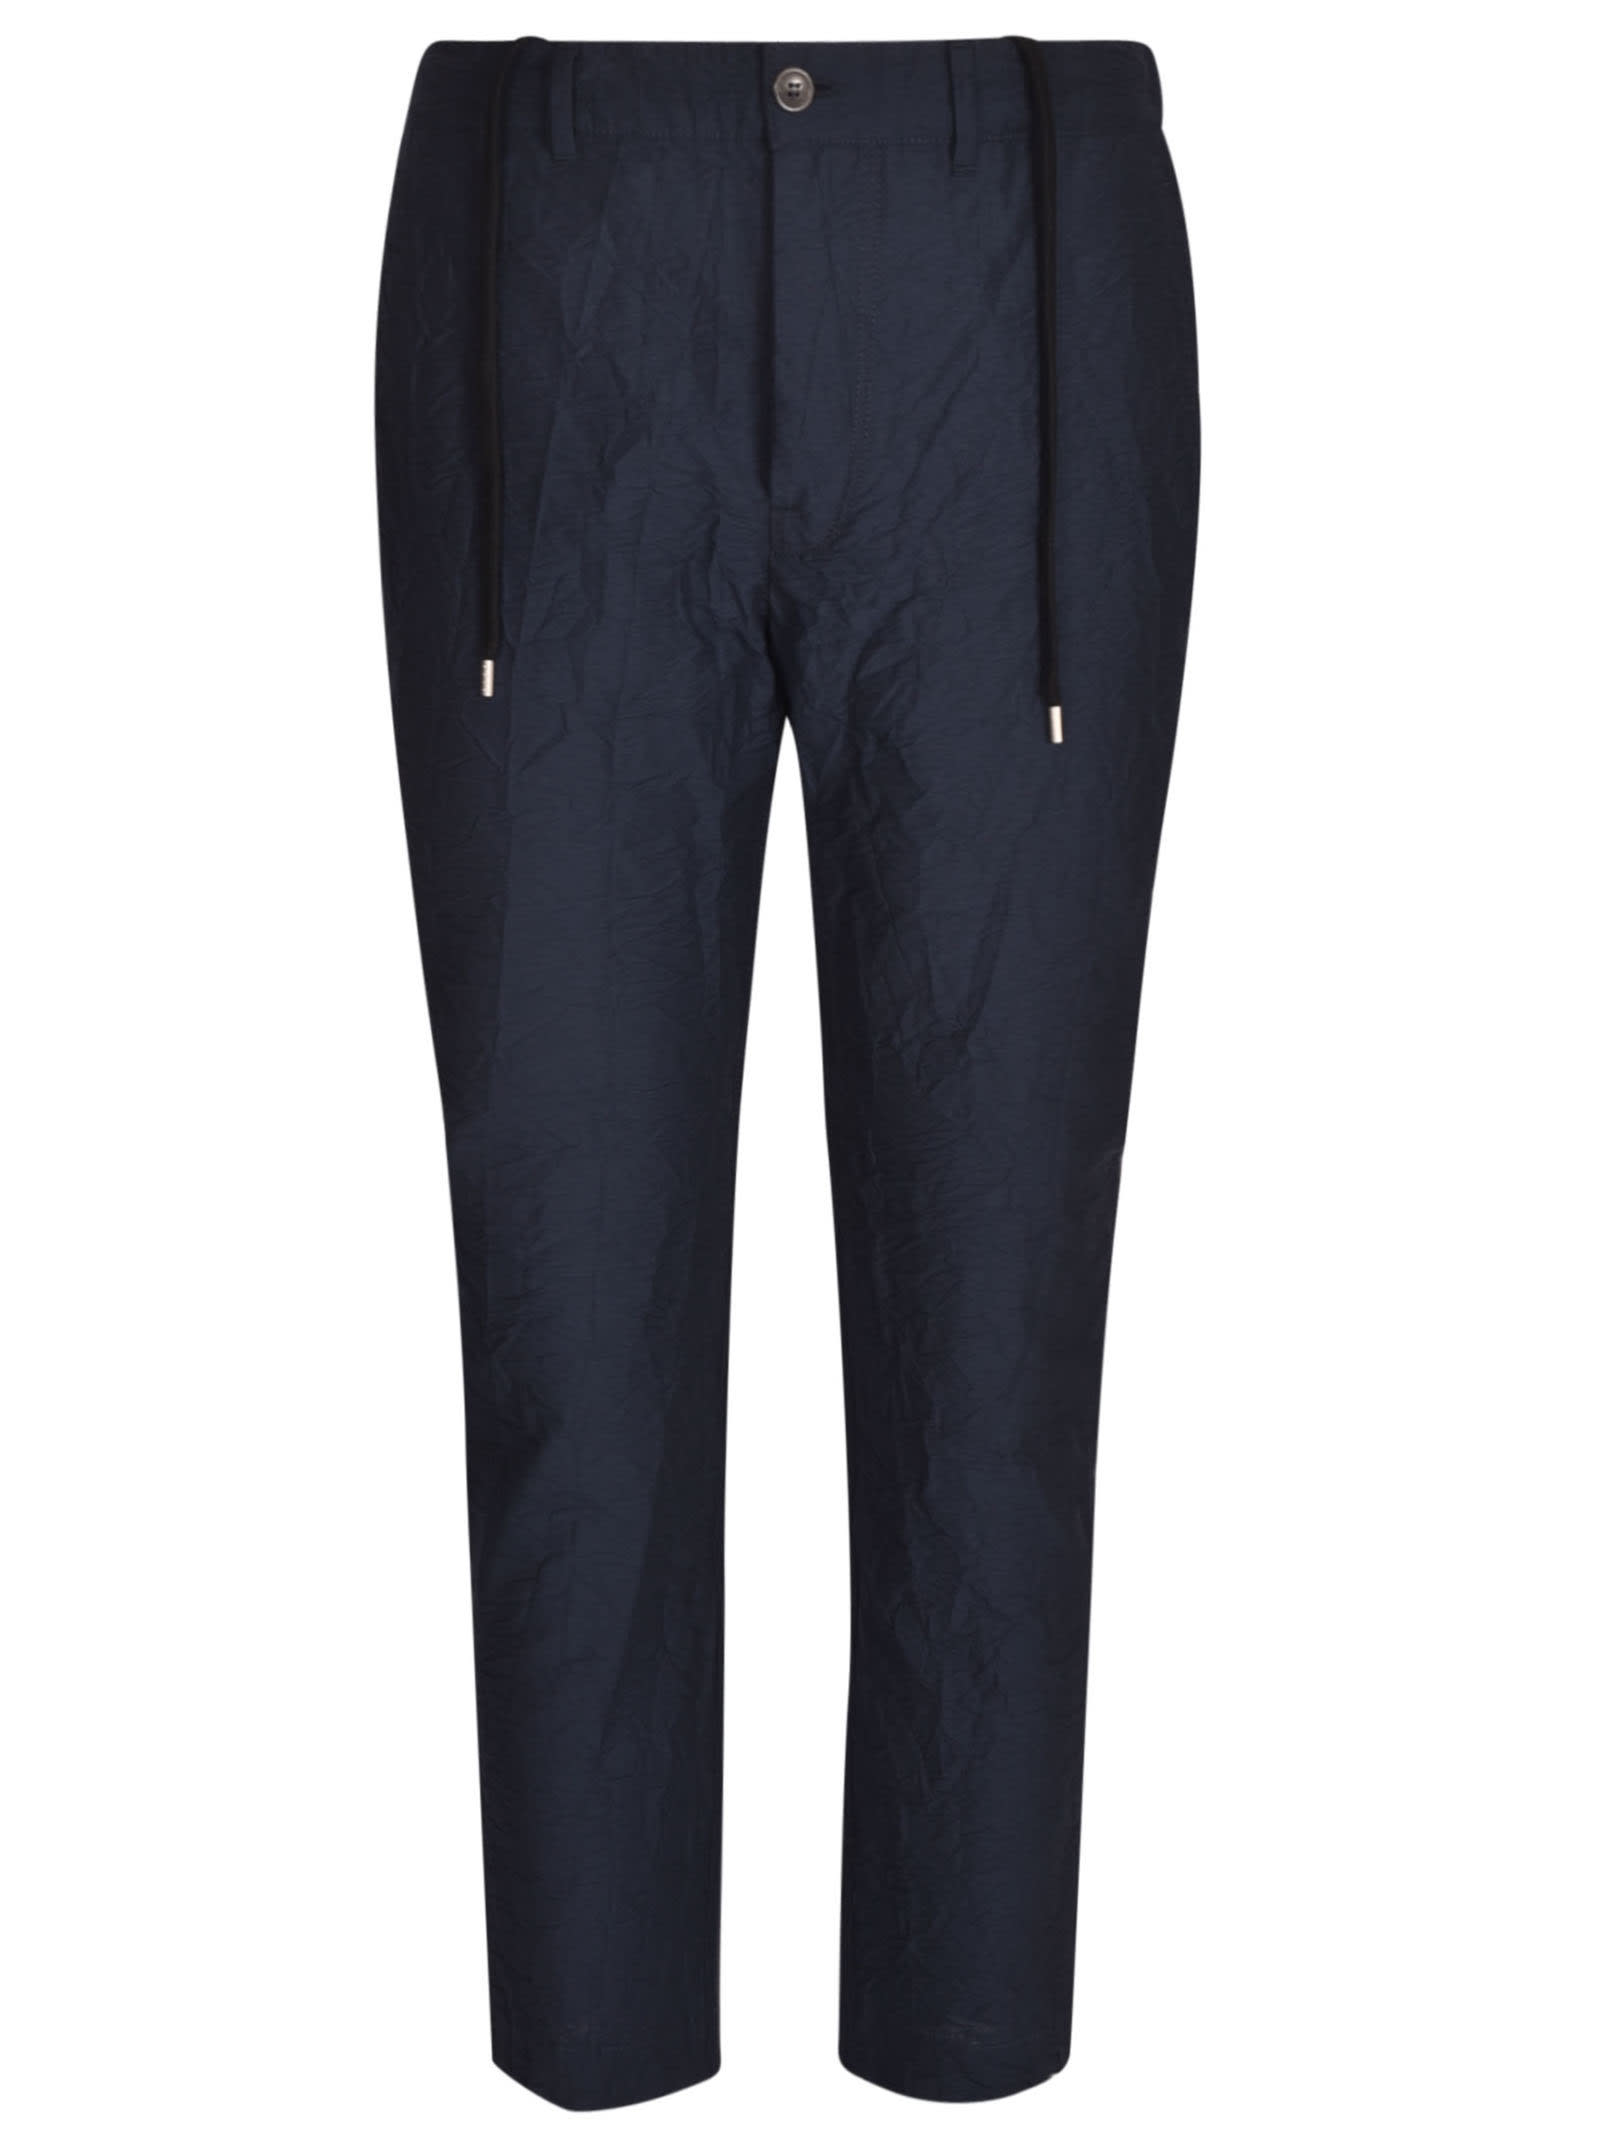 MAURO GRIFONI trousers,GI40011/39 582